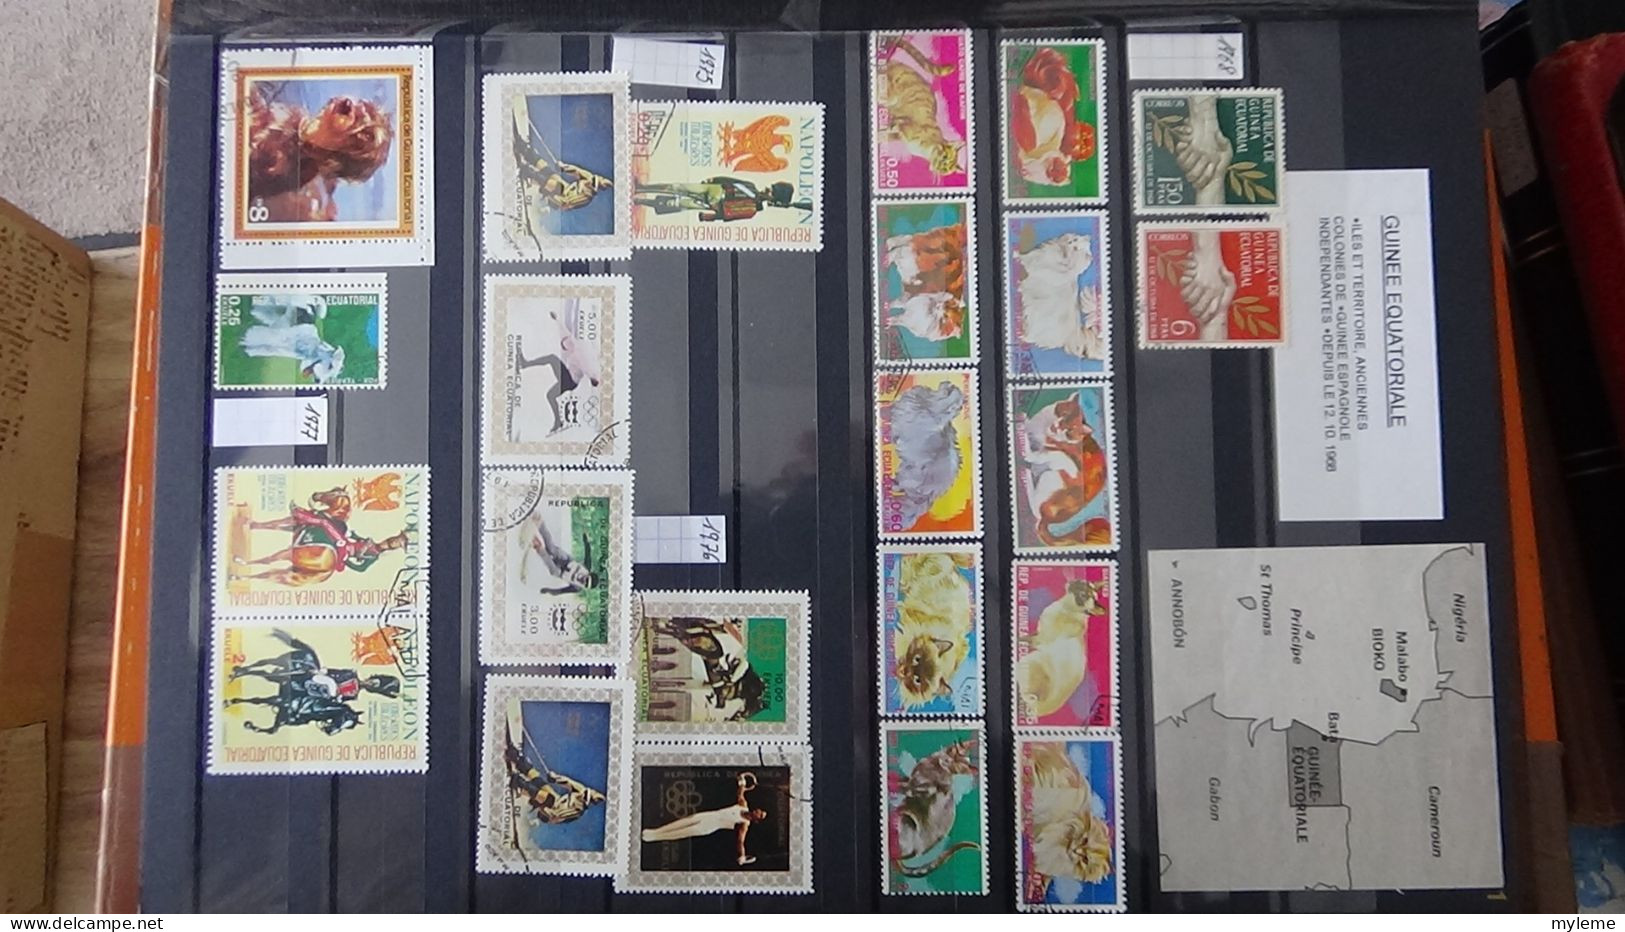 BF33 Ensemble de timbres de divers pays + Orphelin N° 153 ** signé  Cote 1050 euros